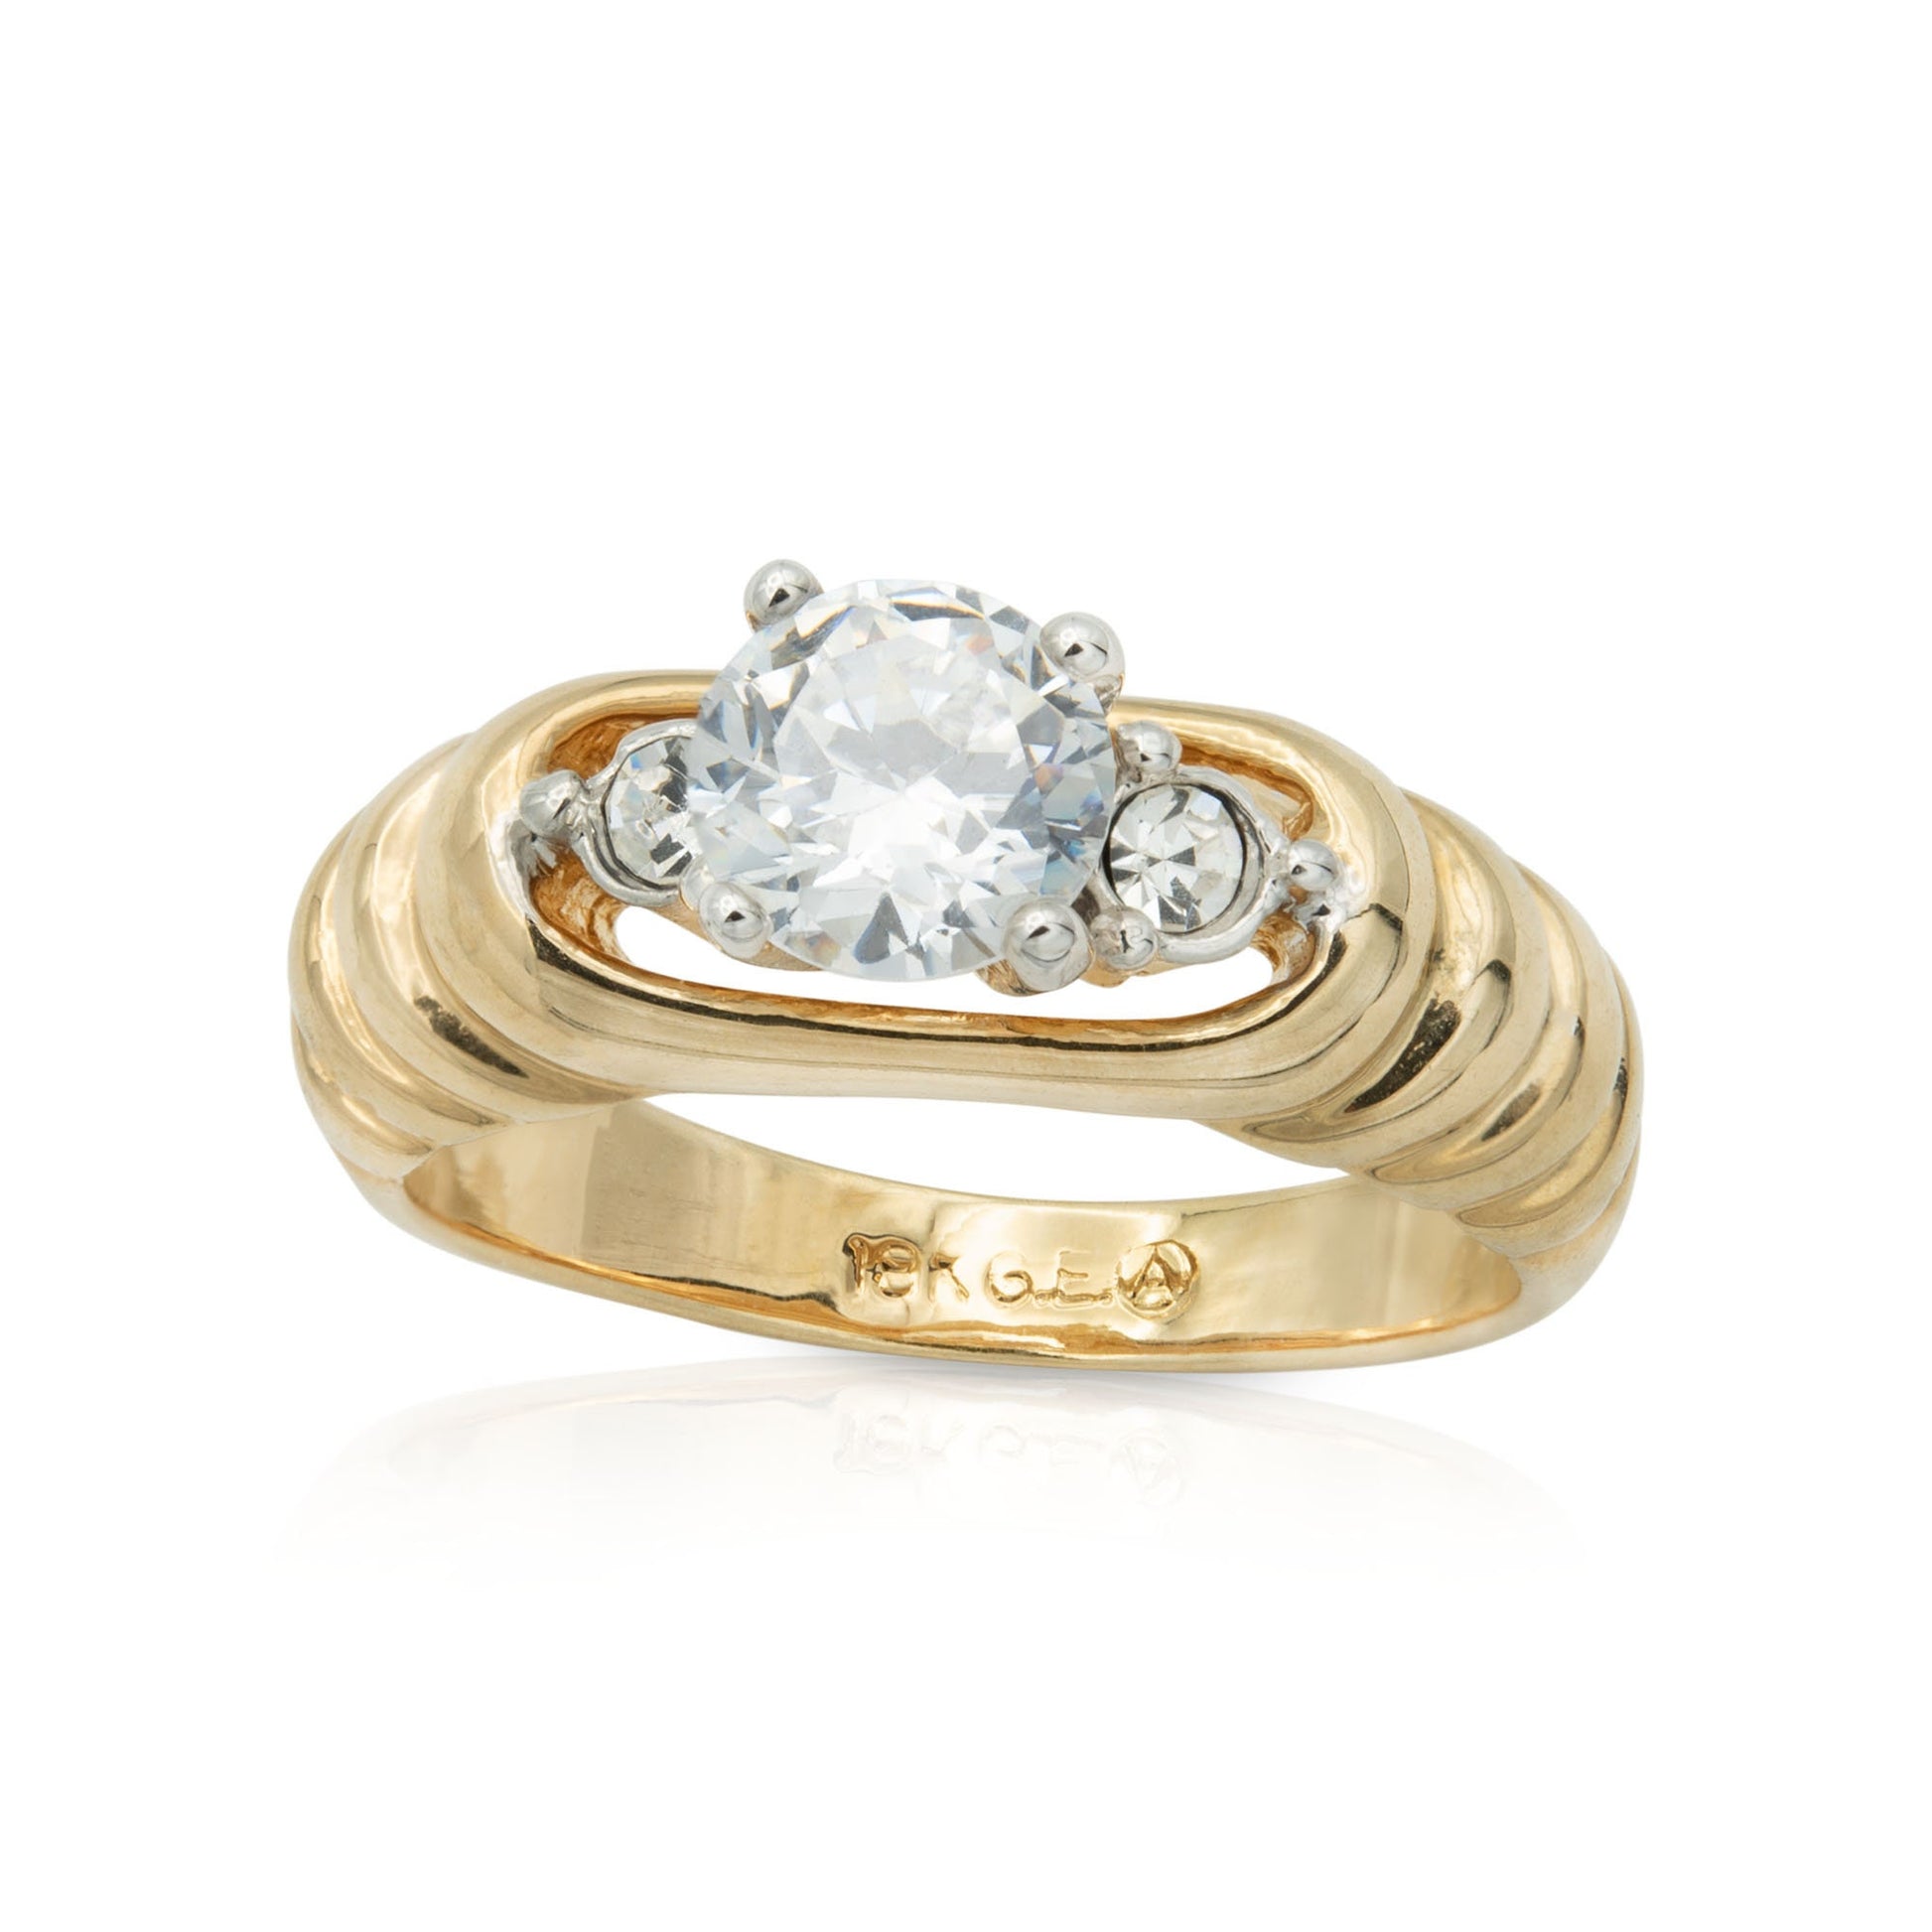 18K RGP Solitaire 2ct AAA+ CZ Diamonds Jewelry Ring 7